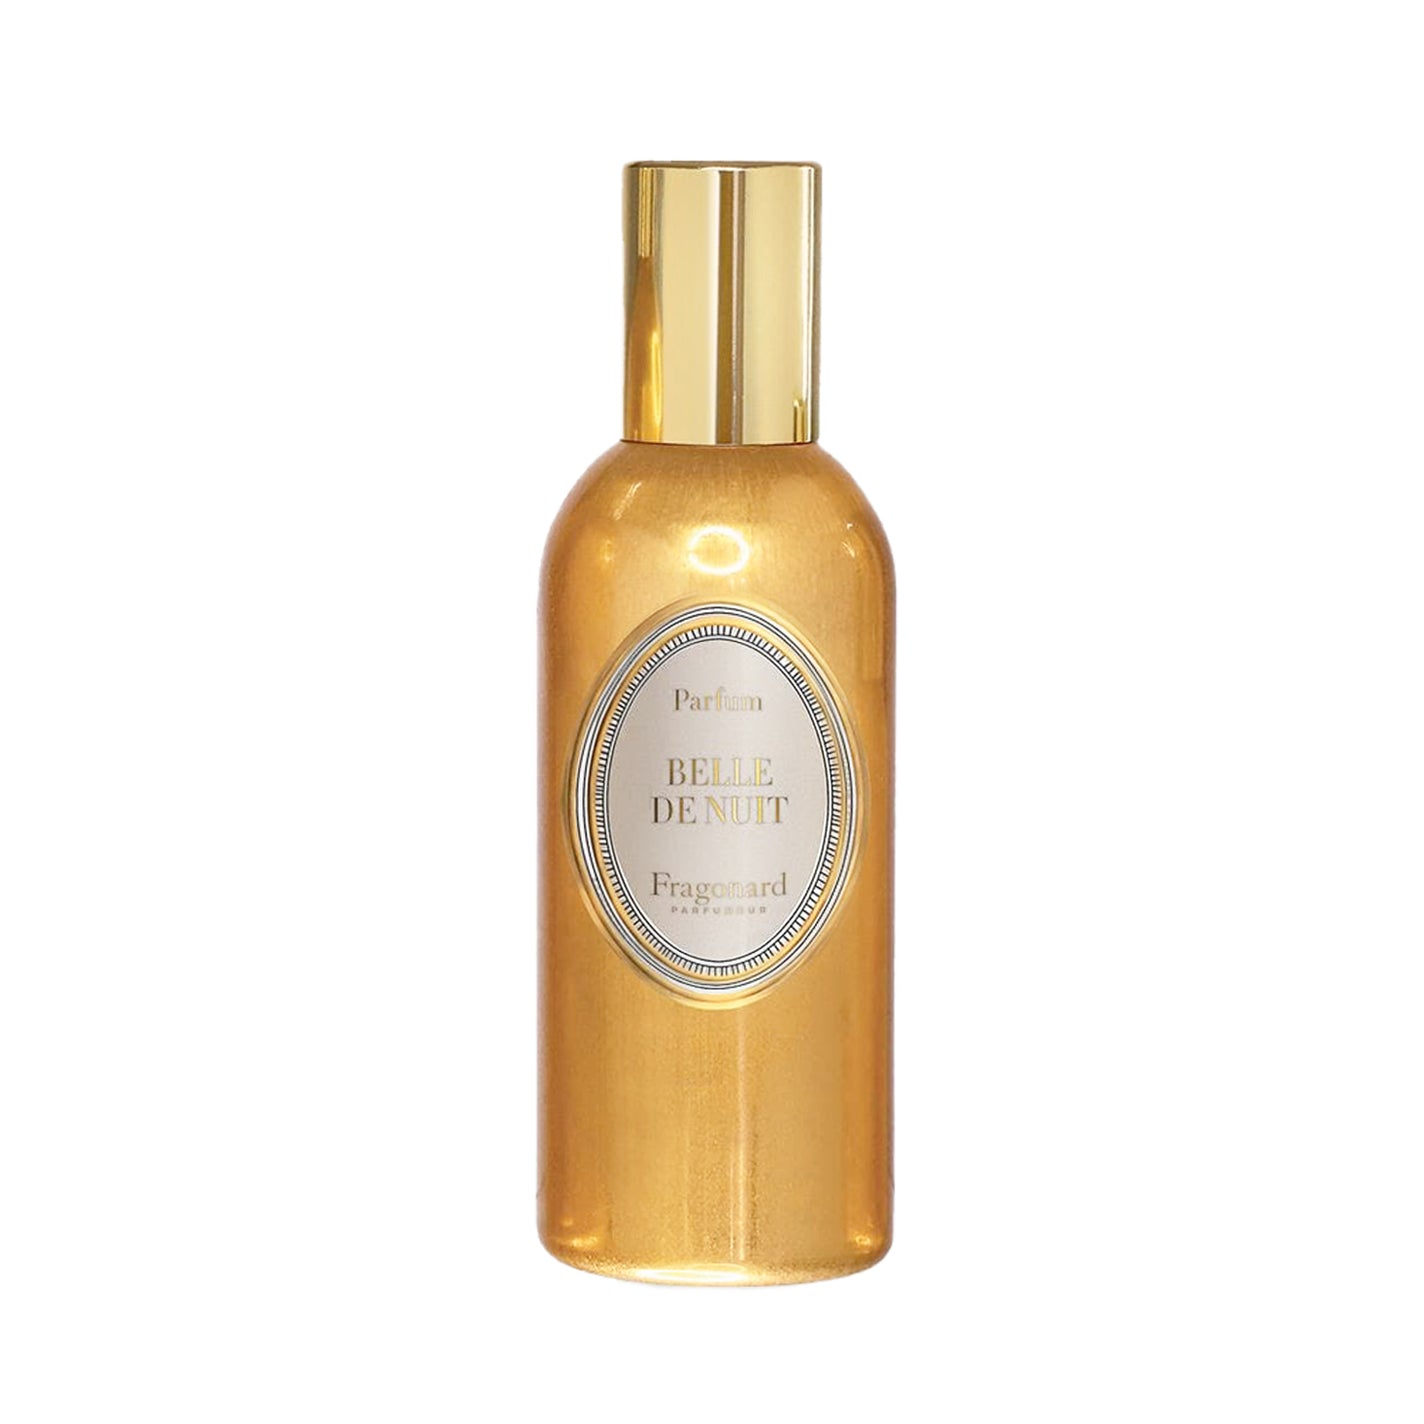 Fragonard Belle de Nuit 'Estagon' Parfum - 60ml